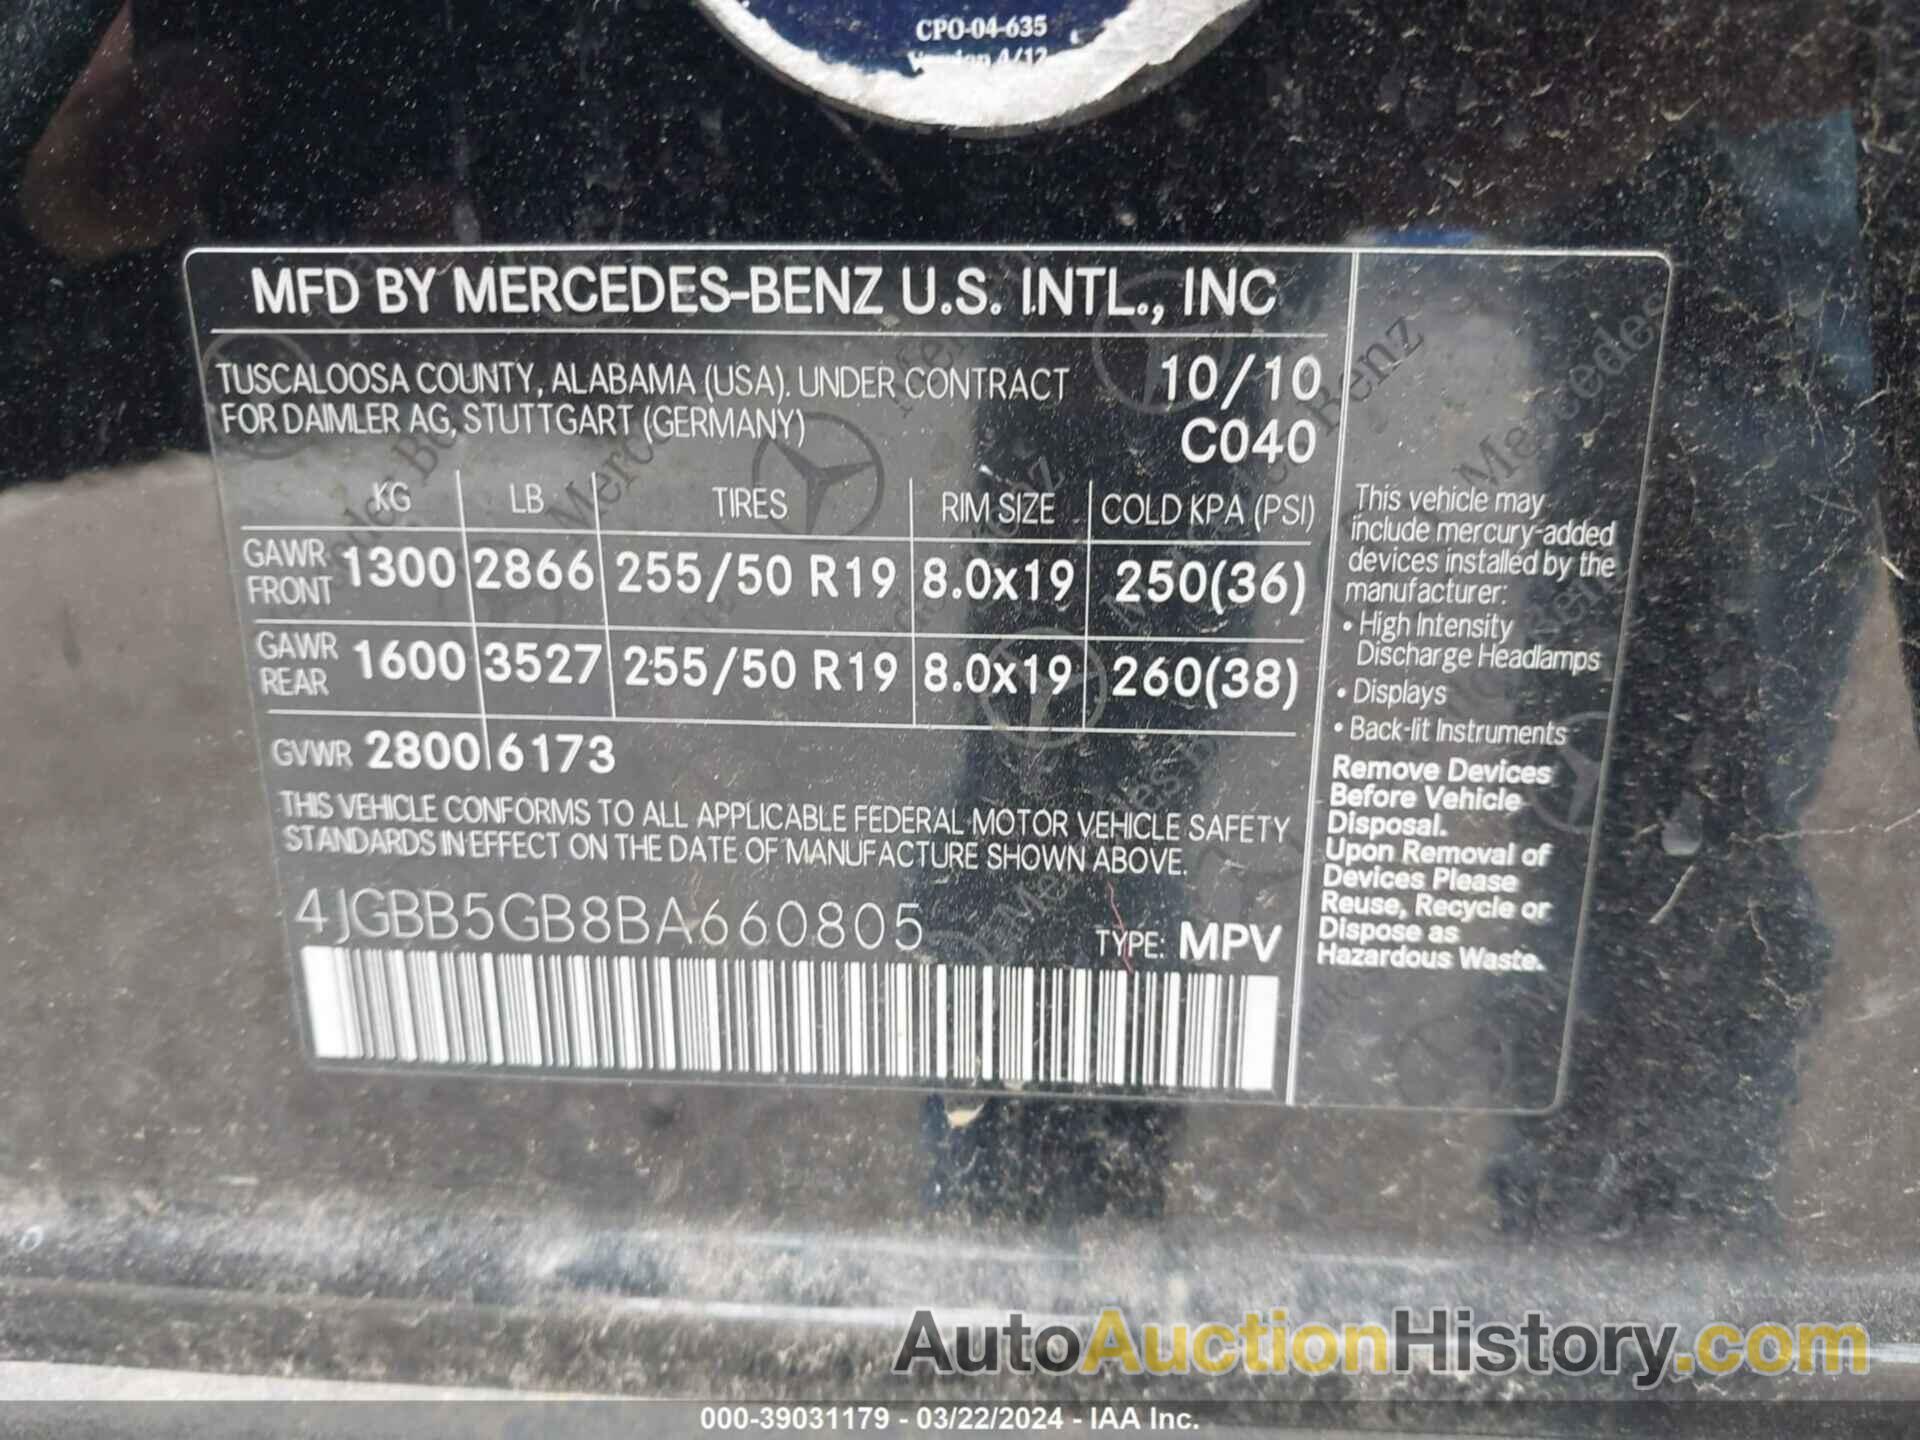 MERCEDES-BENZ ML 350, 4JGBB5GB8BA660805